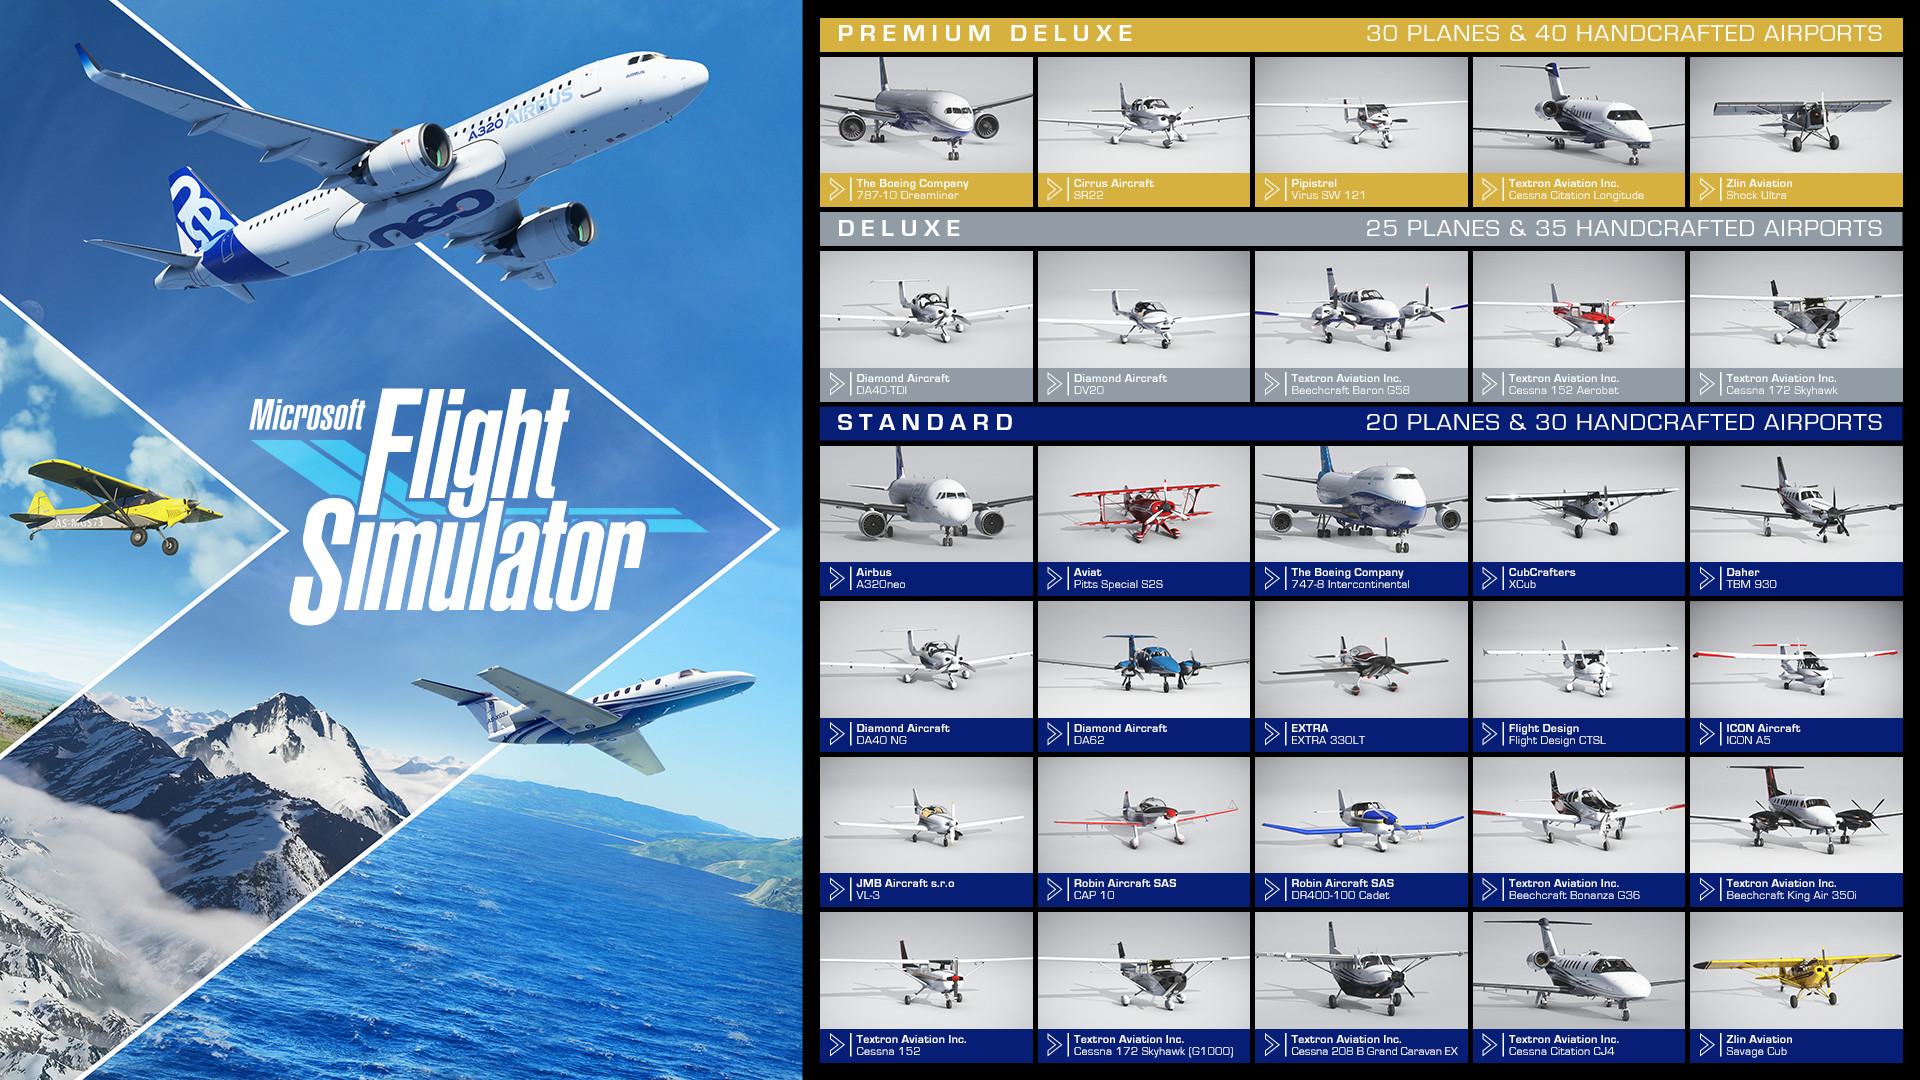 What's On Steam - Microsoft Flight Simulator, microsoft flight simulator  steam 